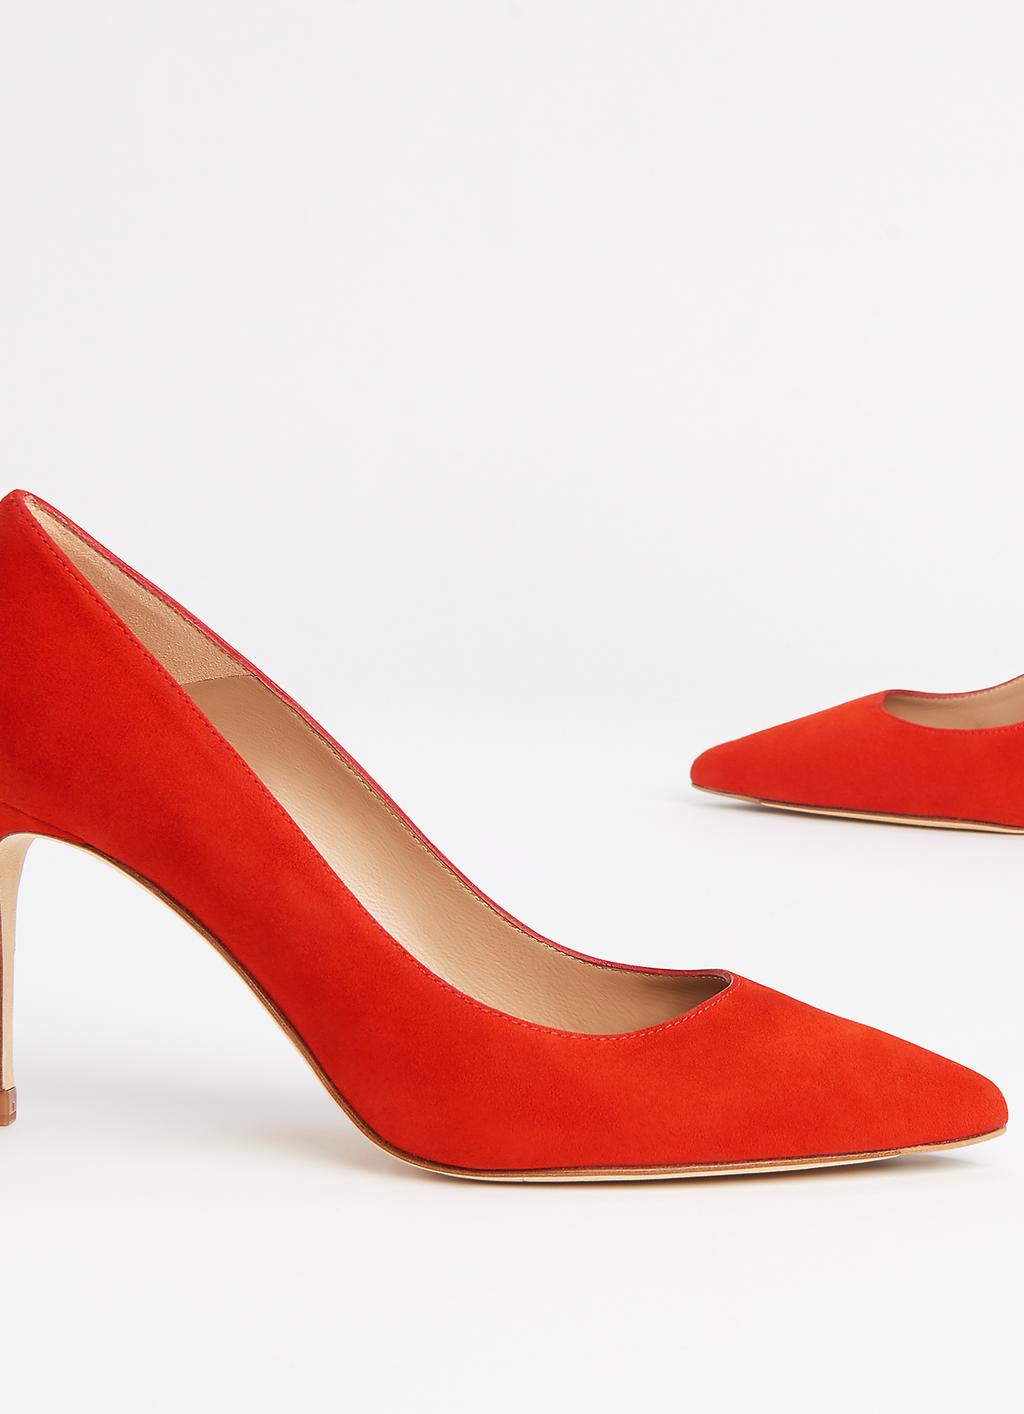 Floret Scarlet Suede Courts | Shoes | L.K.Bennett